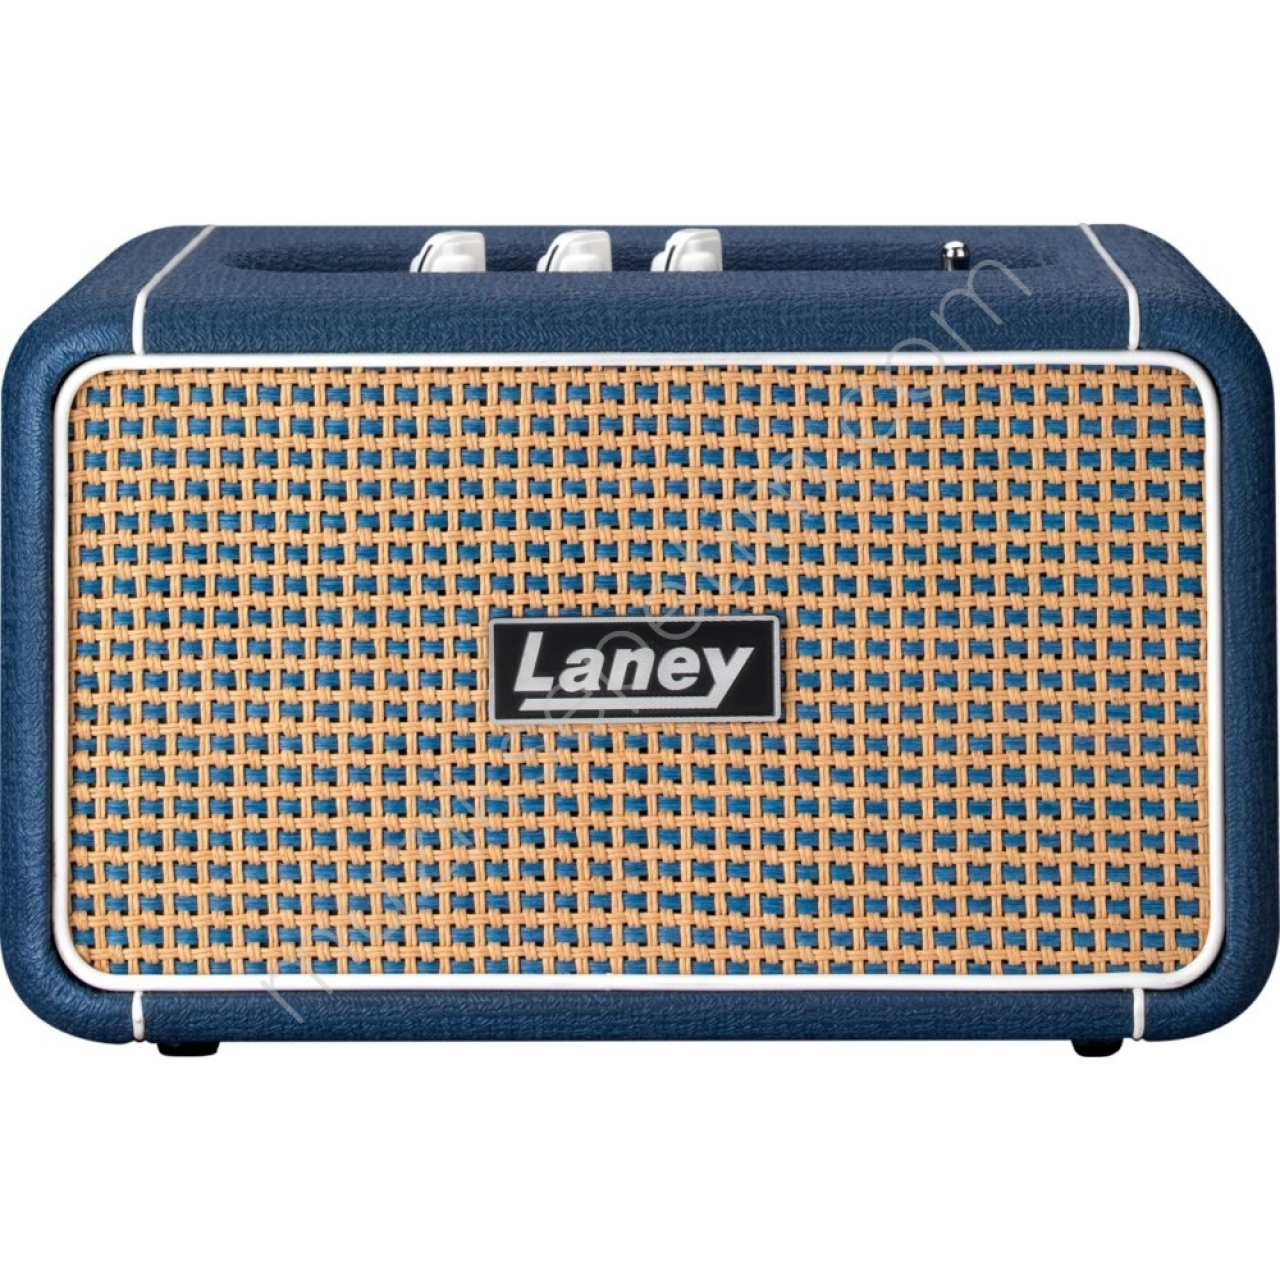 Laney F67-LIONHEART Taşınabilir Bluetooth Hoparlör